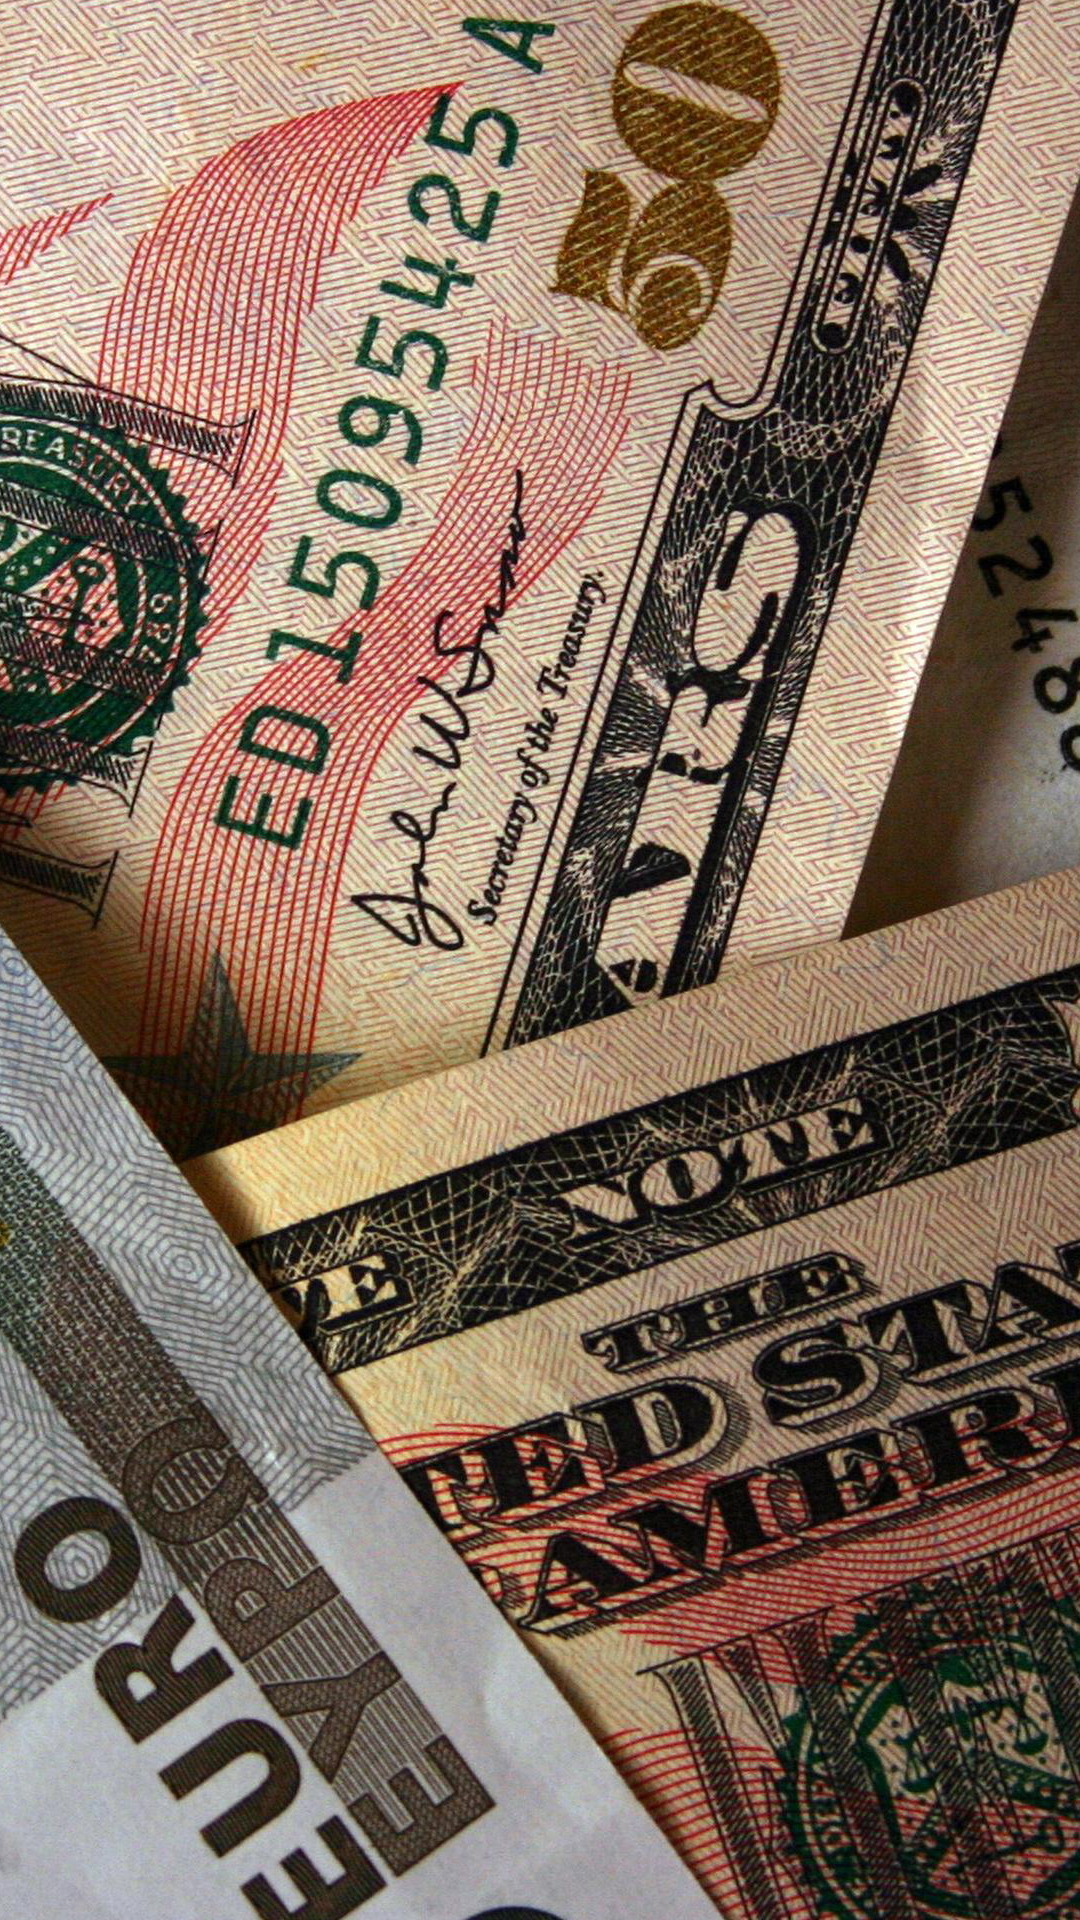 Money Wallpaper Photos Download The BEST Free Money Wallpaper Stock Photos   HD Images